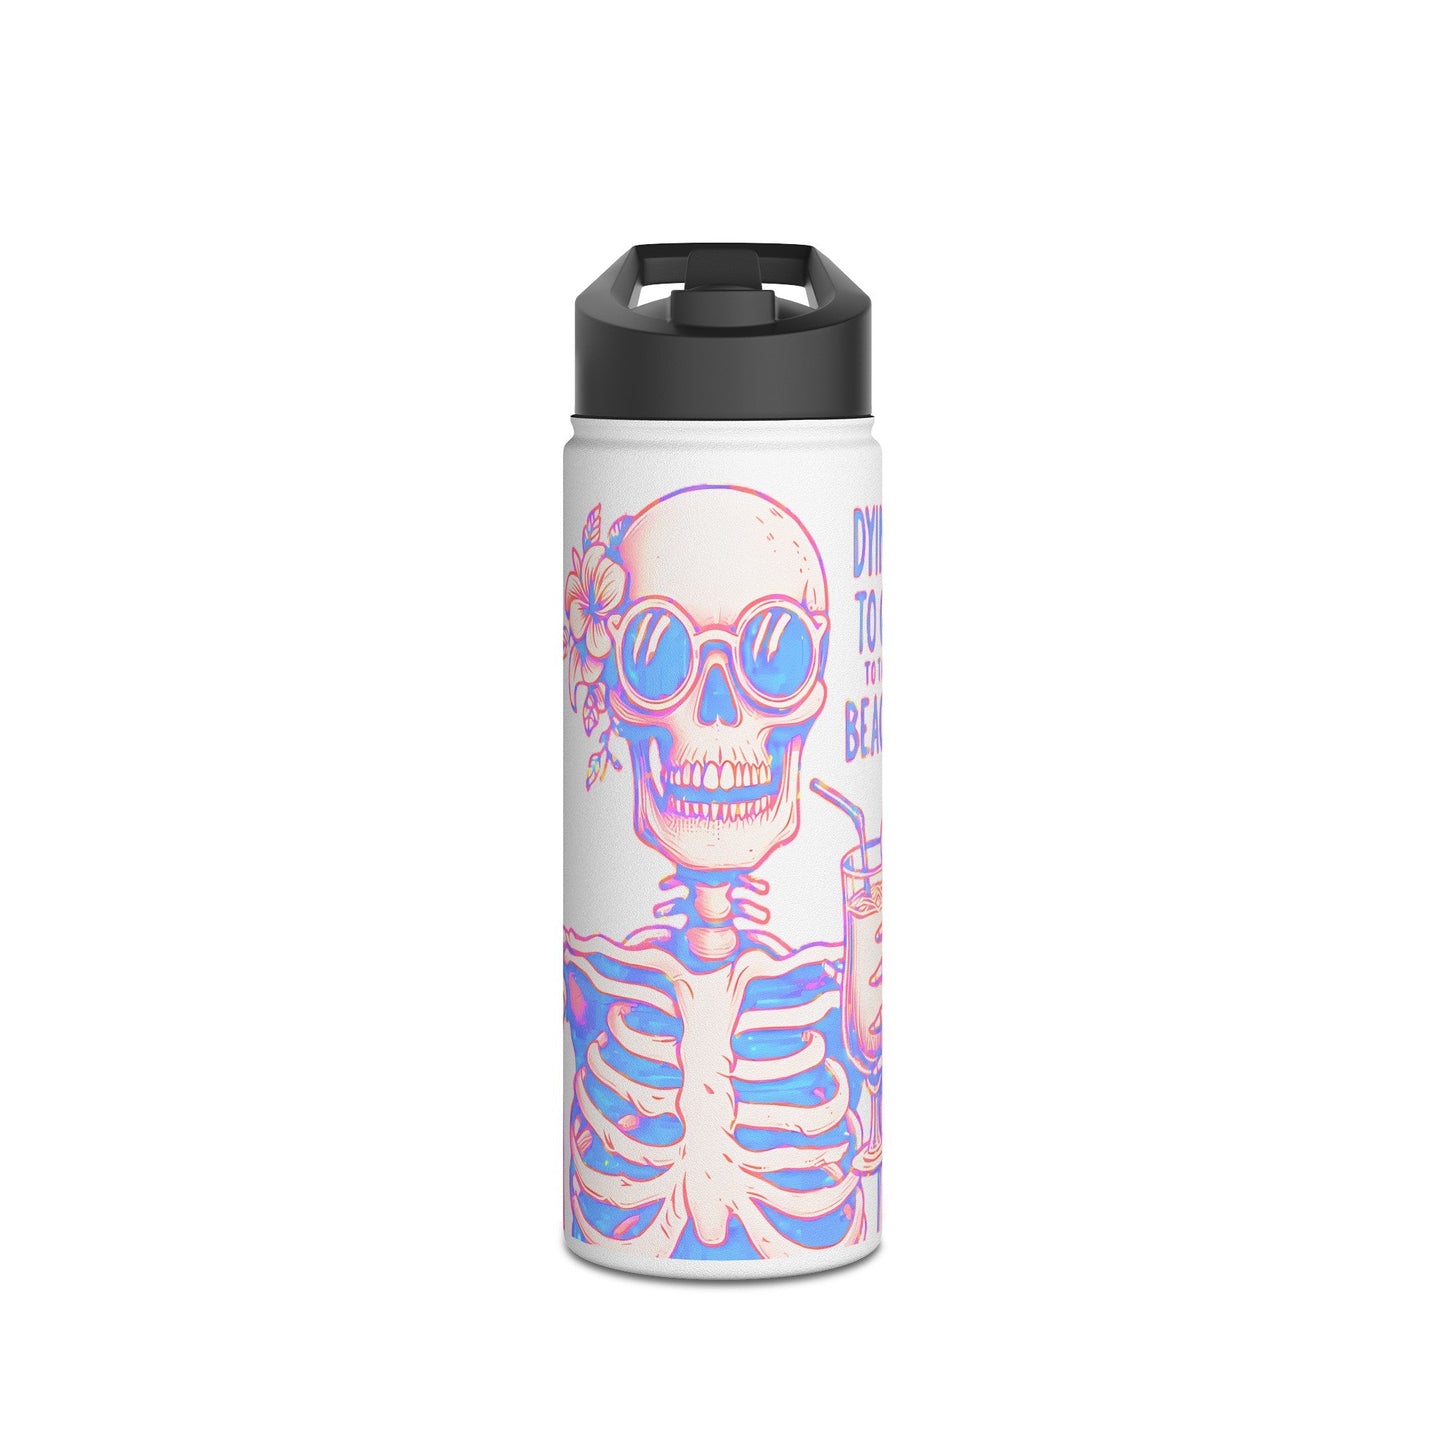 Dying To Go To The Beach Skeleton Stainless Steel Water BottleMugVTZdesigns18ozWhiteBack - to - SchoolBeverageBottles